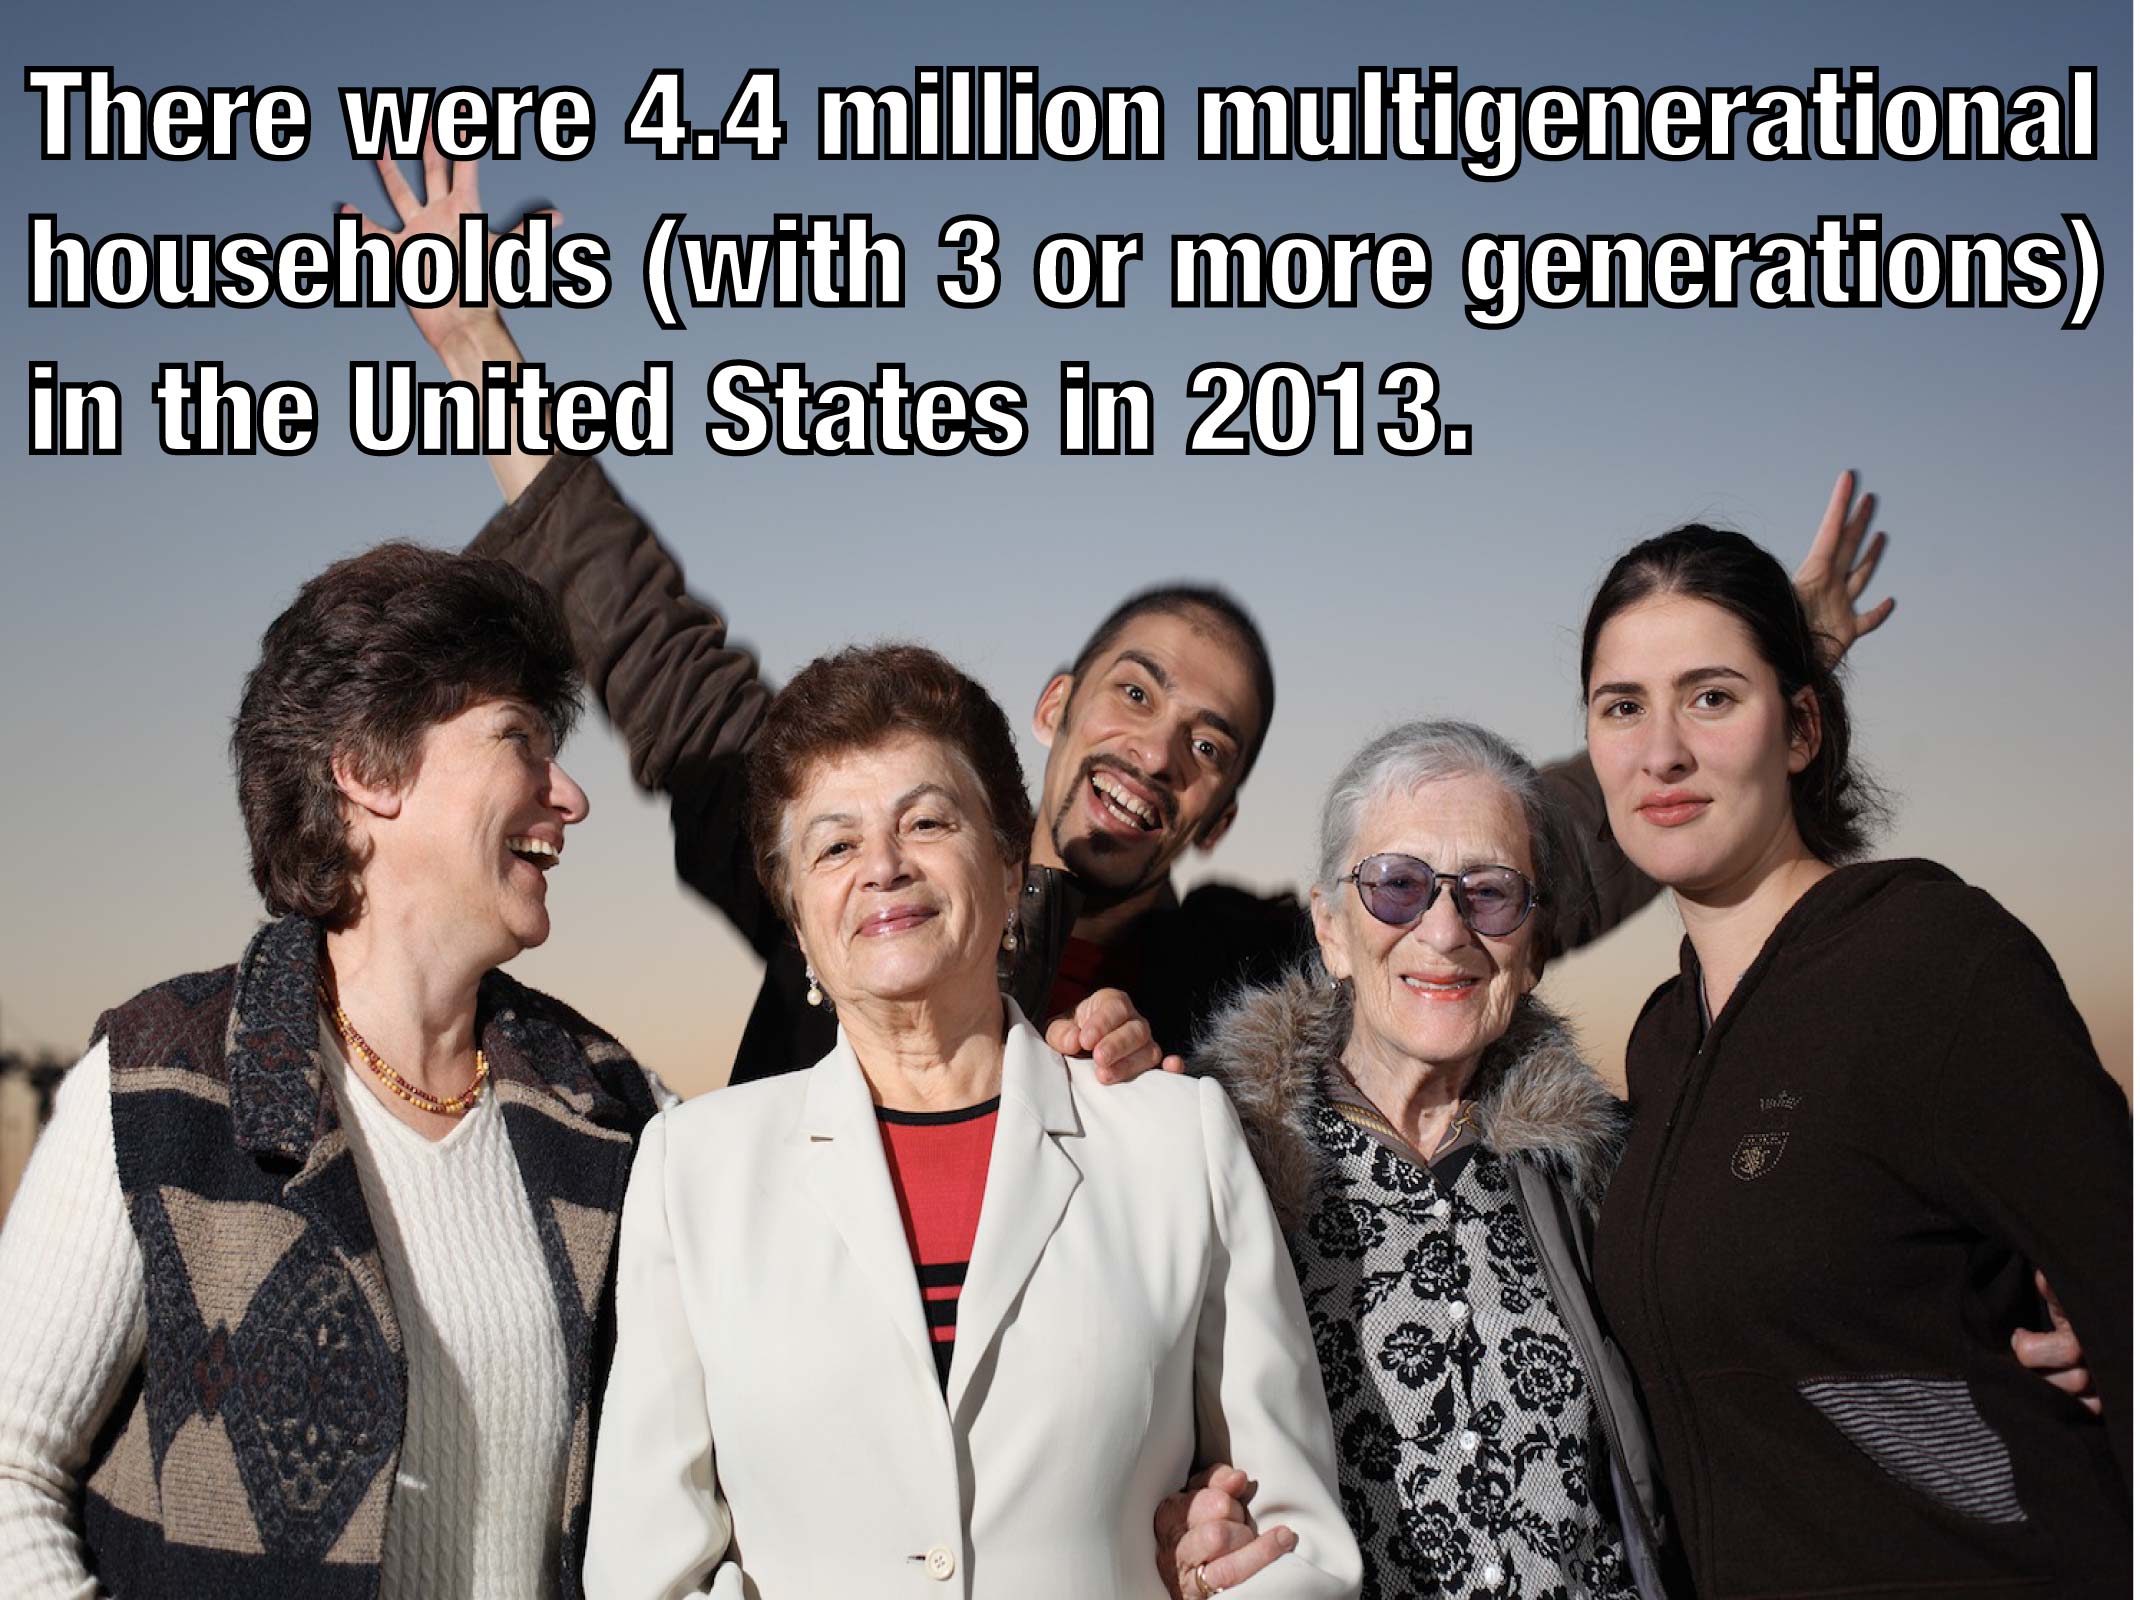 Multigenerational family Background image via Shutterstock. Modified.